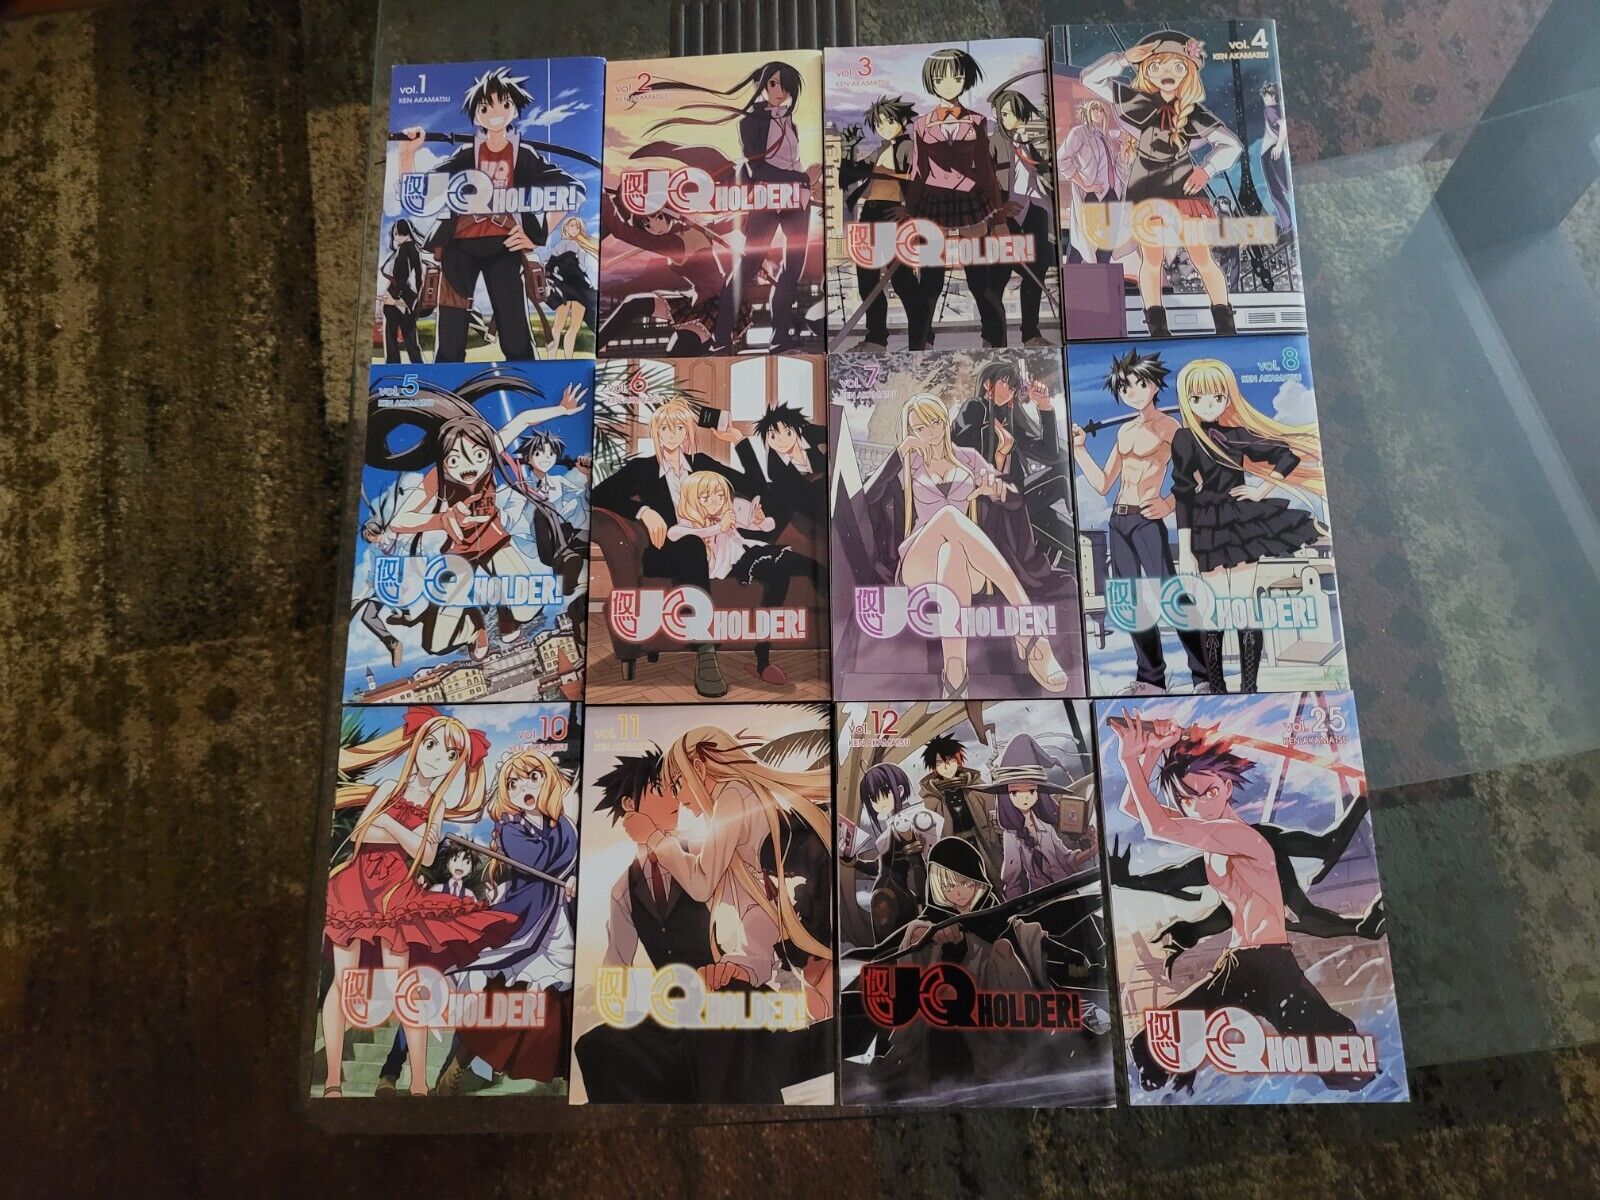 uq holder manga volume 1-8,10-12,25 by Ken Akamatsu